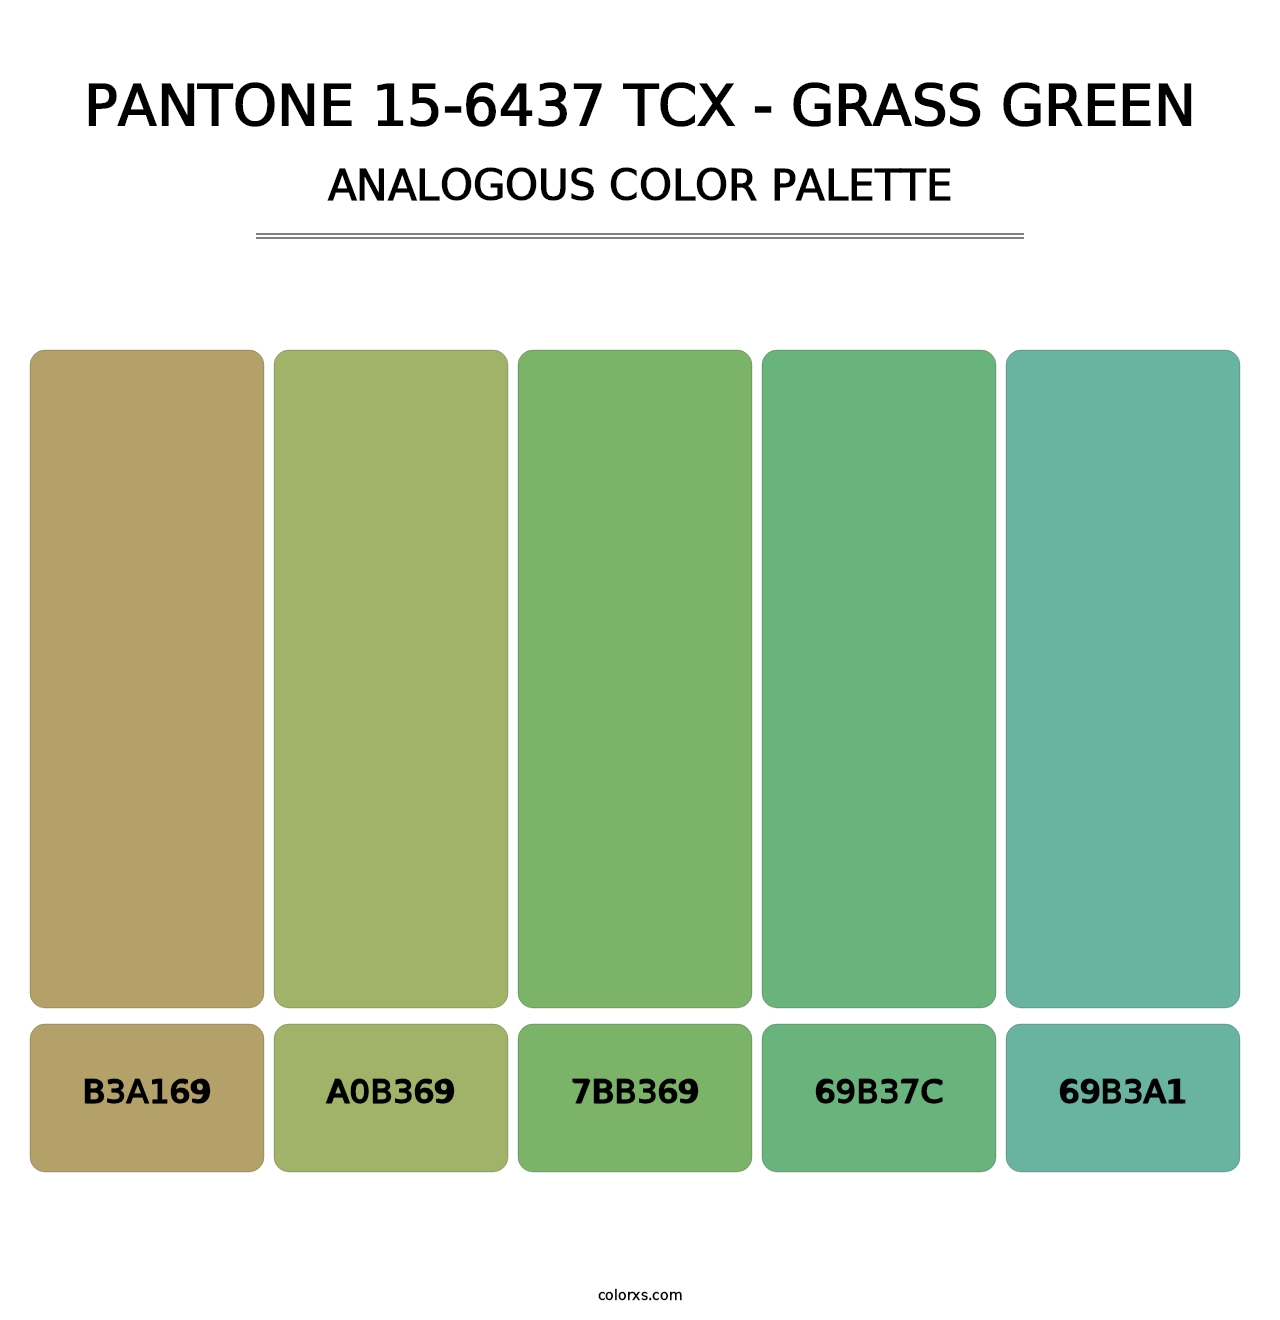 PANTONE 15-6437 TCX - Grass Green - Analogous Color Palette